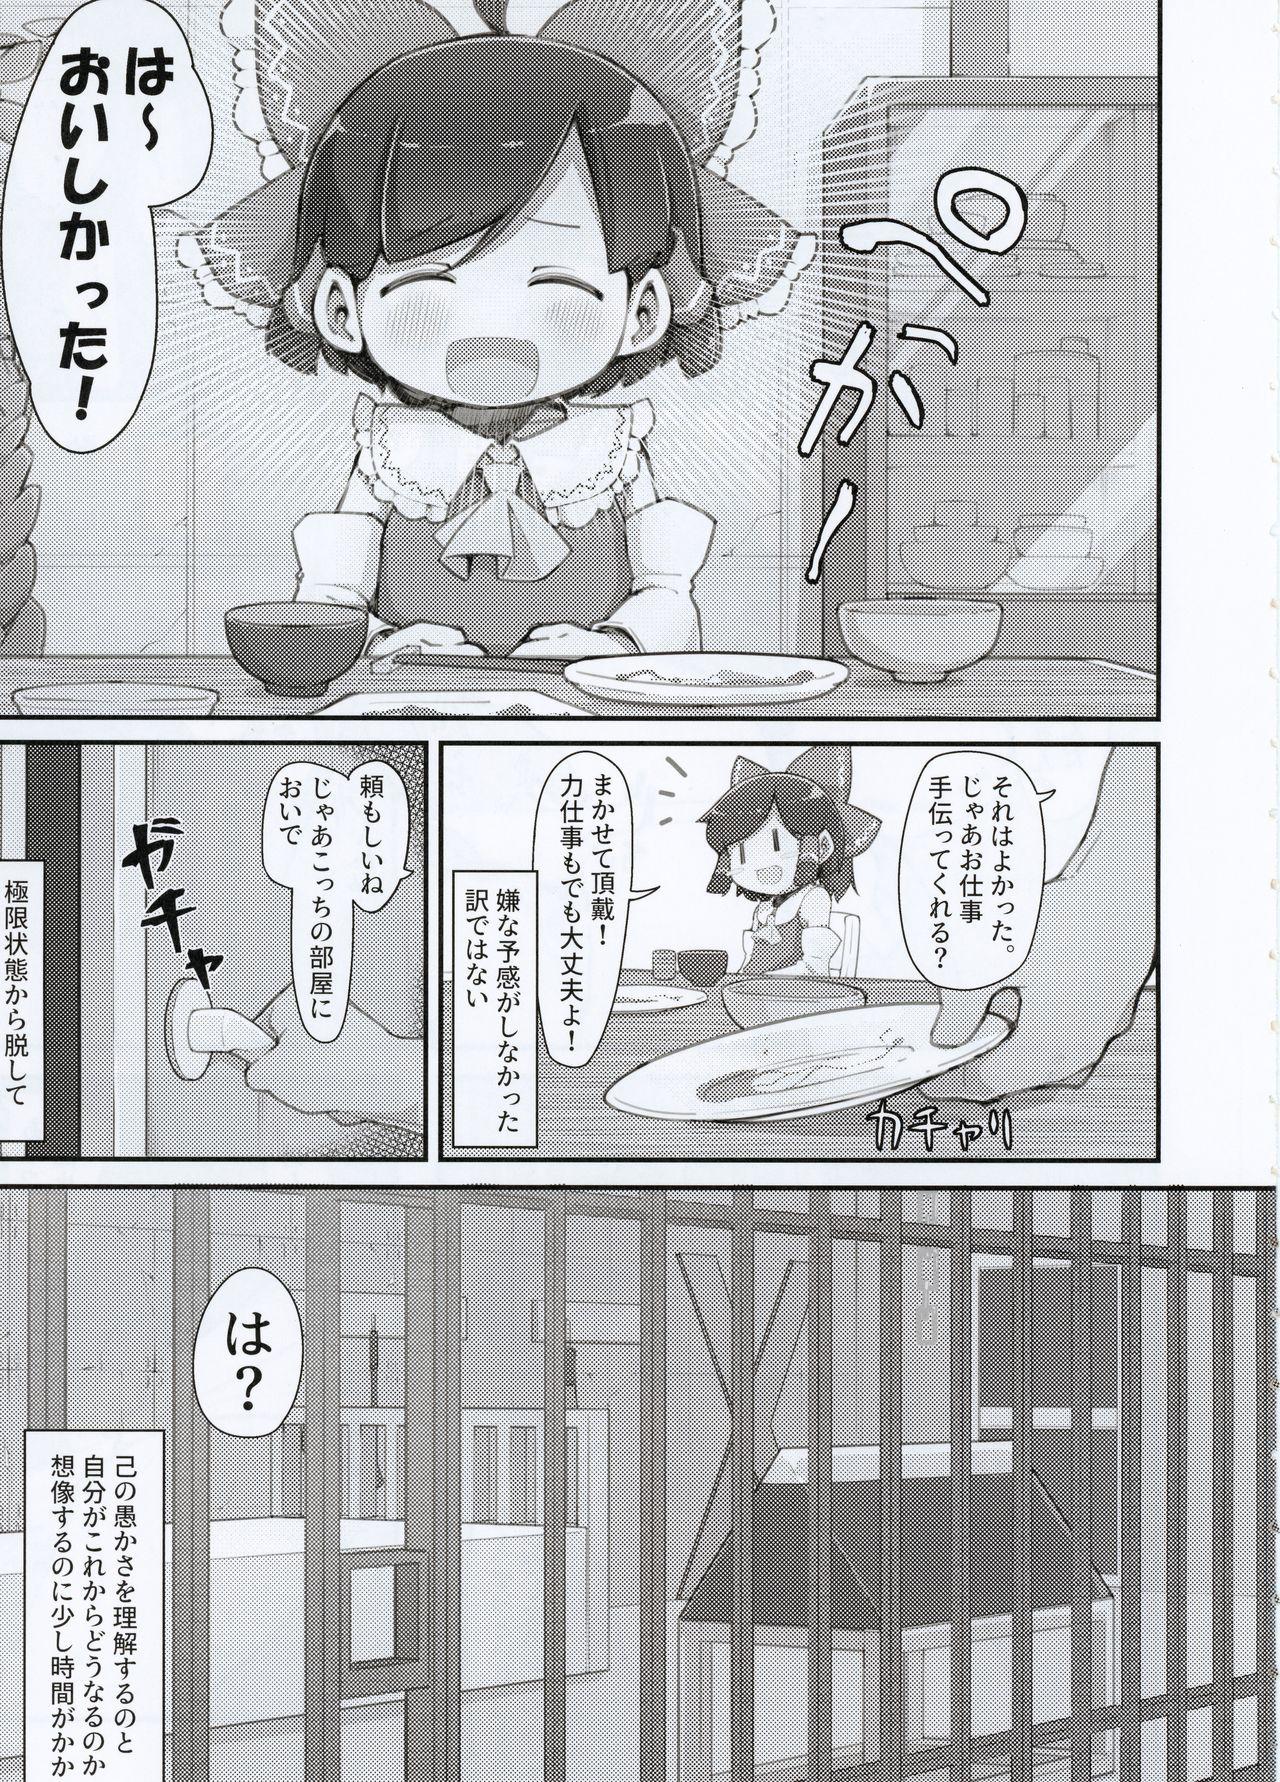 Peeing Hakurei no Miko Gaikai Ochi Ura Rei Rei ● ● Satsuei - Touhou project Dominate - Page 4